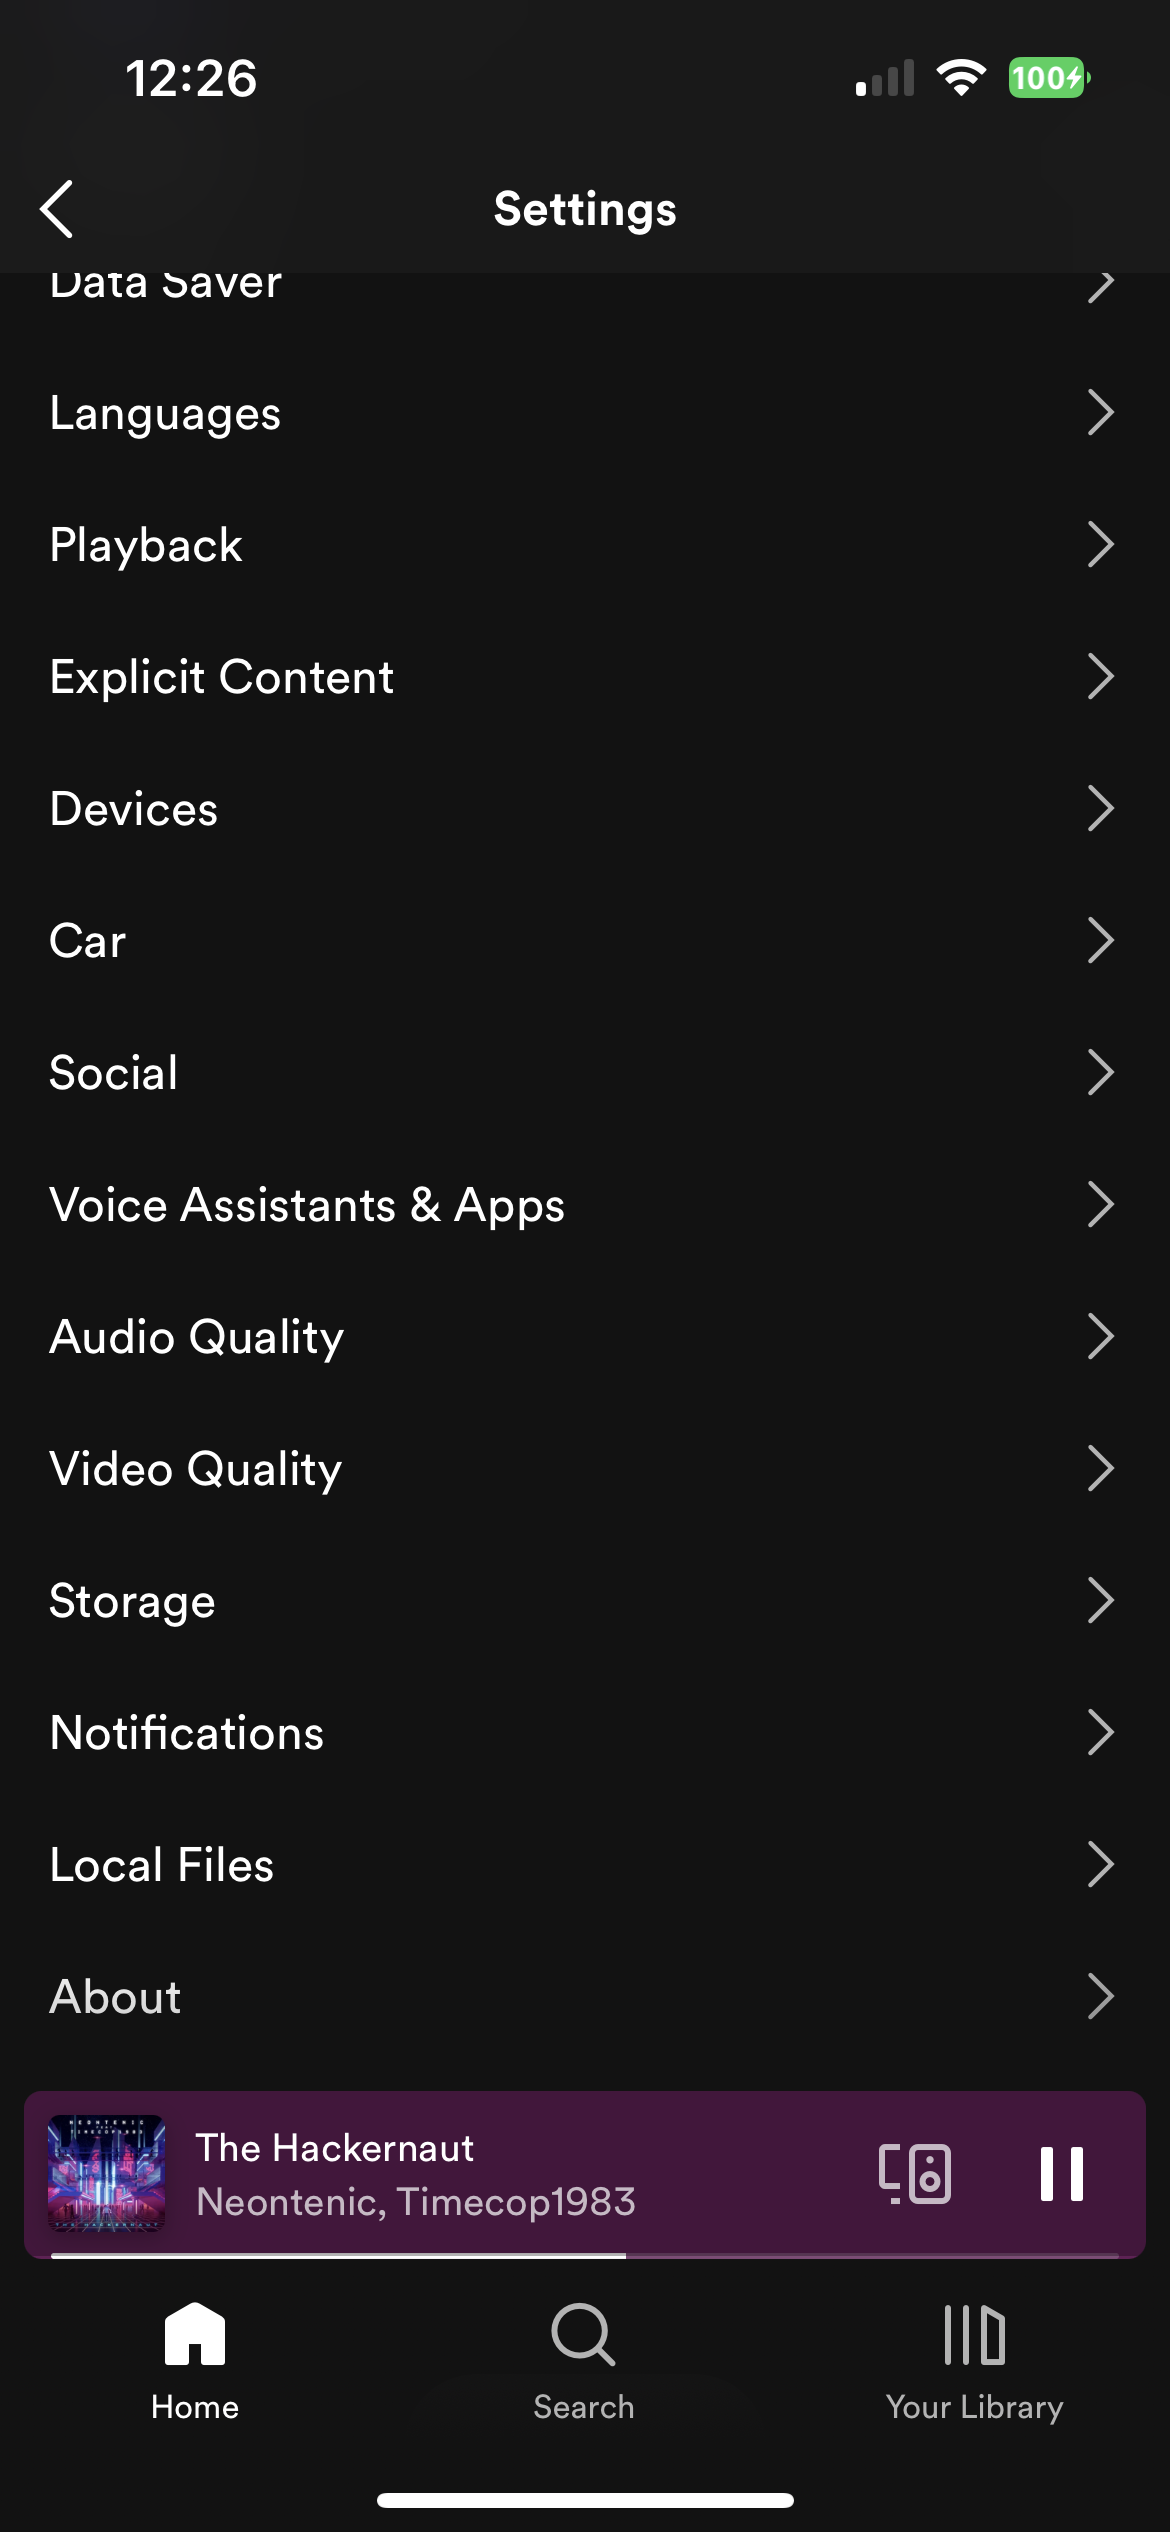 The Settings menu in the Spotify iPhone app